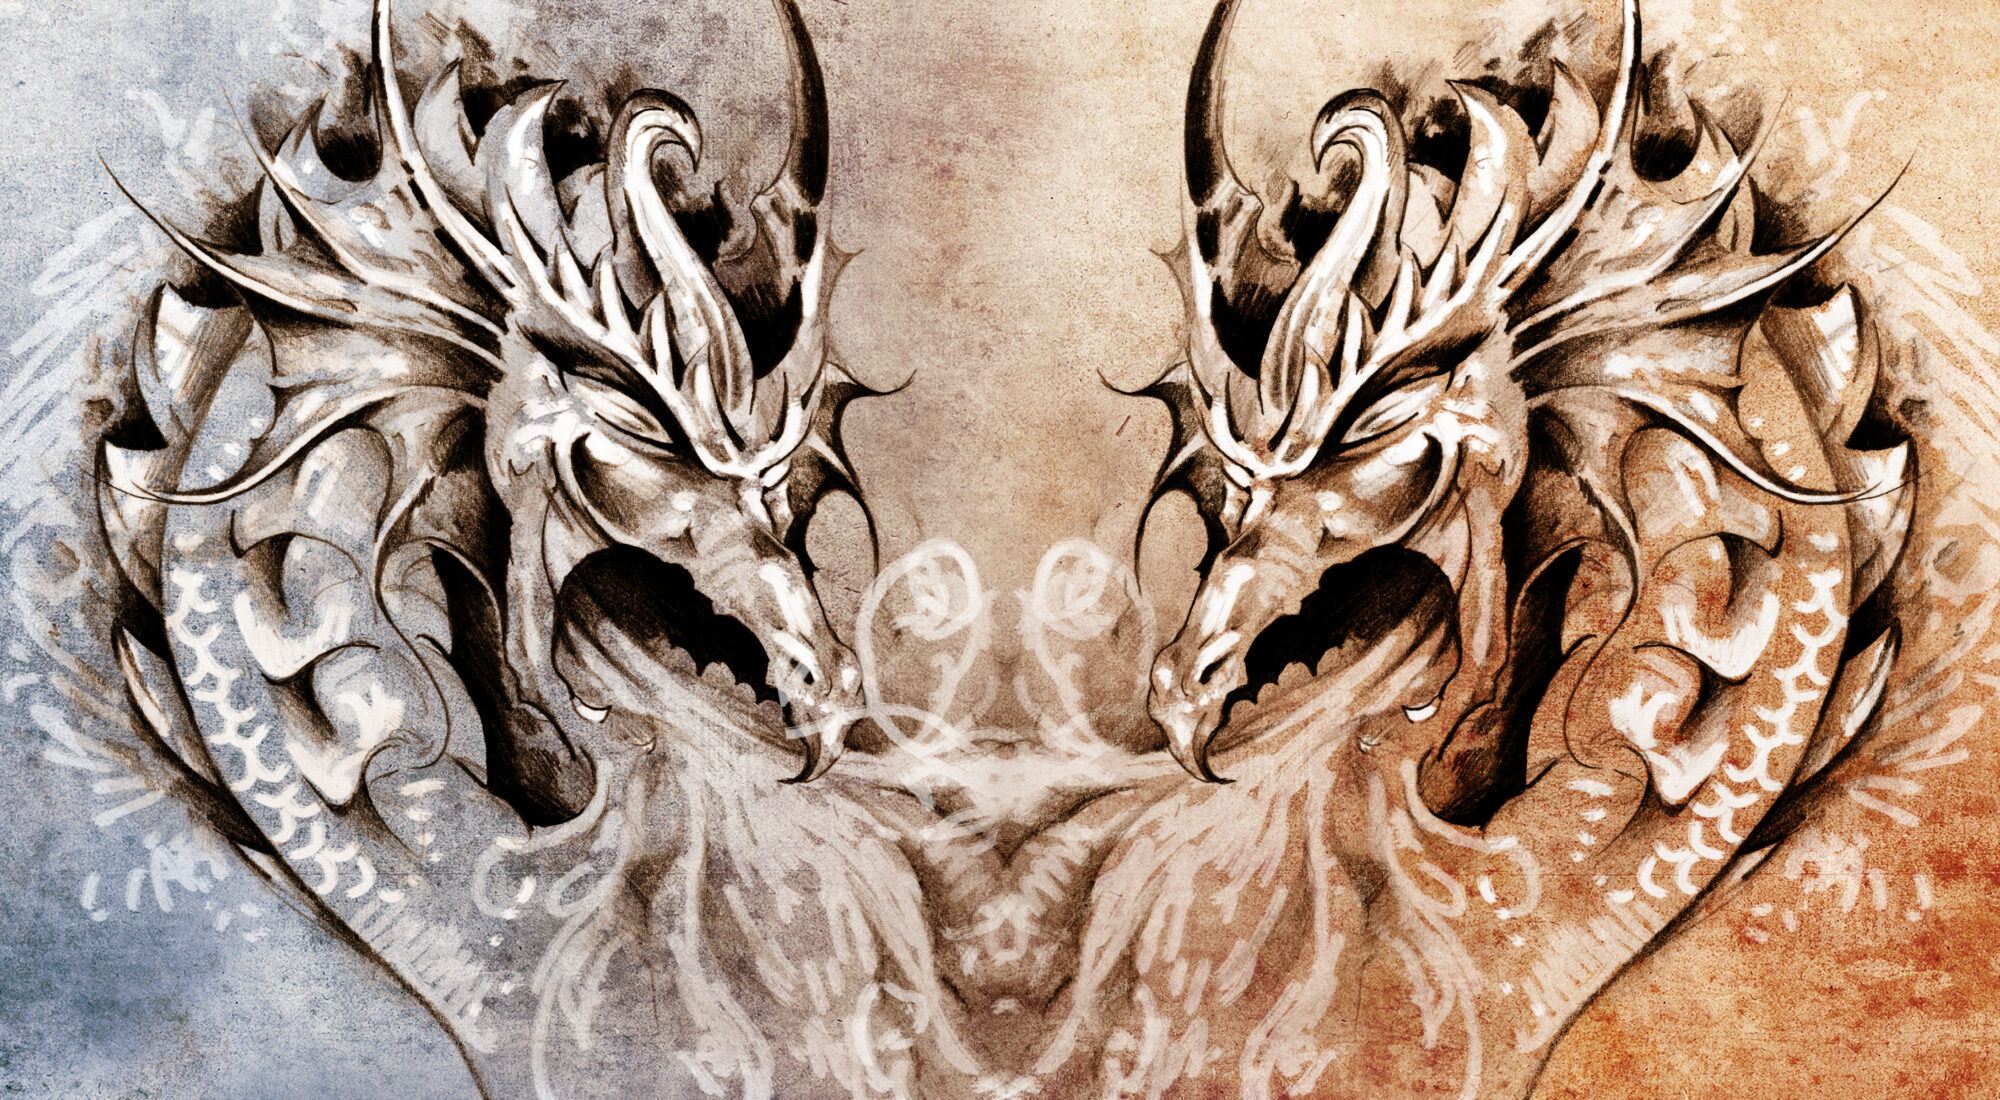 two dragon heads breathing smoke